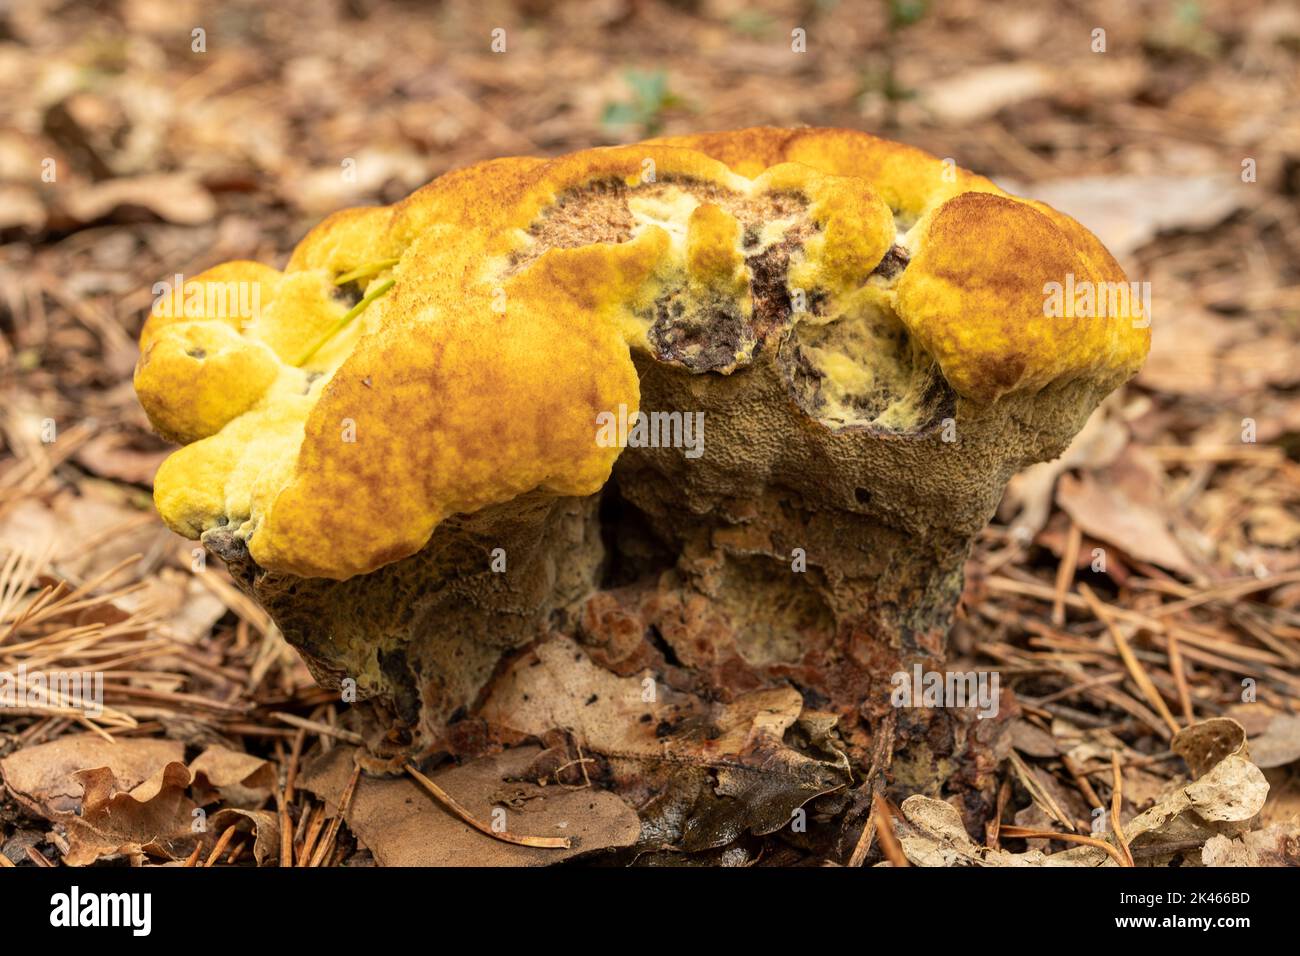 Dyers mazegill fungus, also called dyer's polypore (Phaeolus schweinitzii) on woodland floor during autumn or september, England, UK Stock Photo